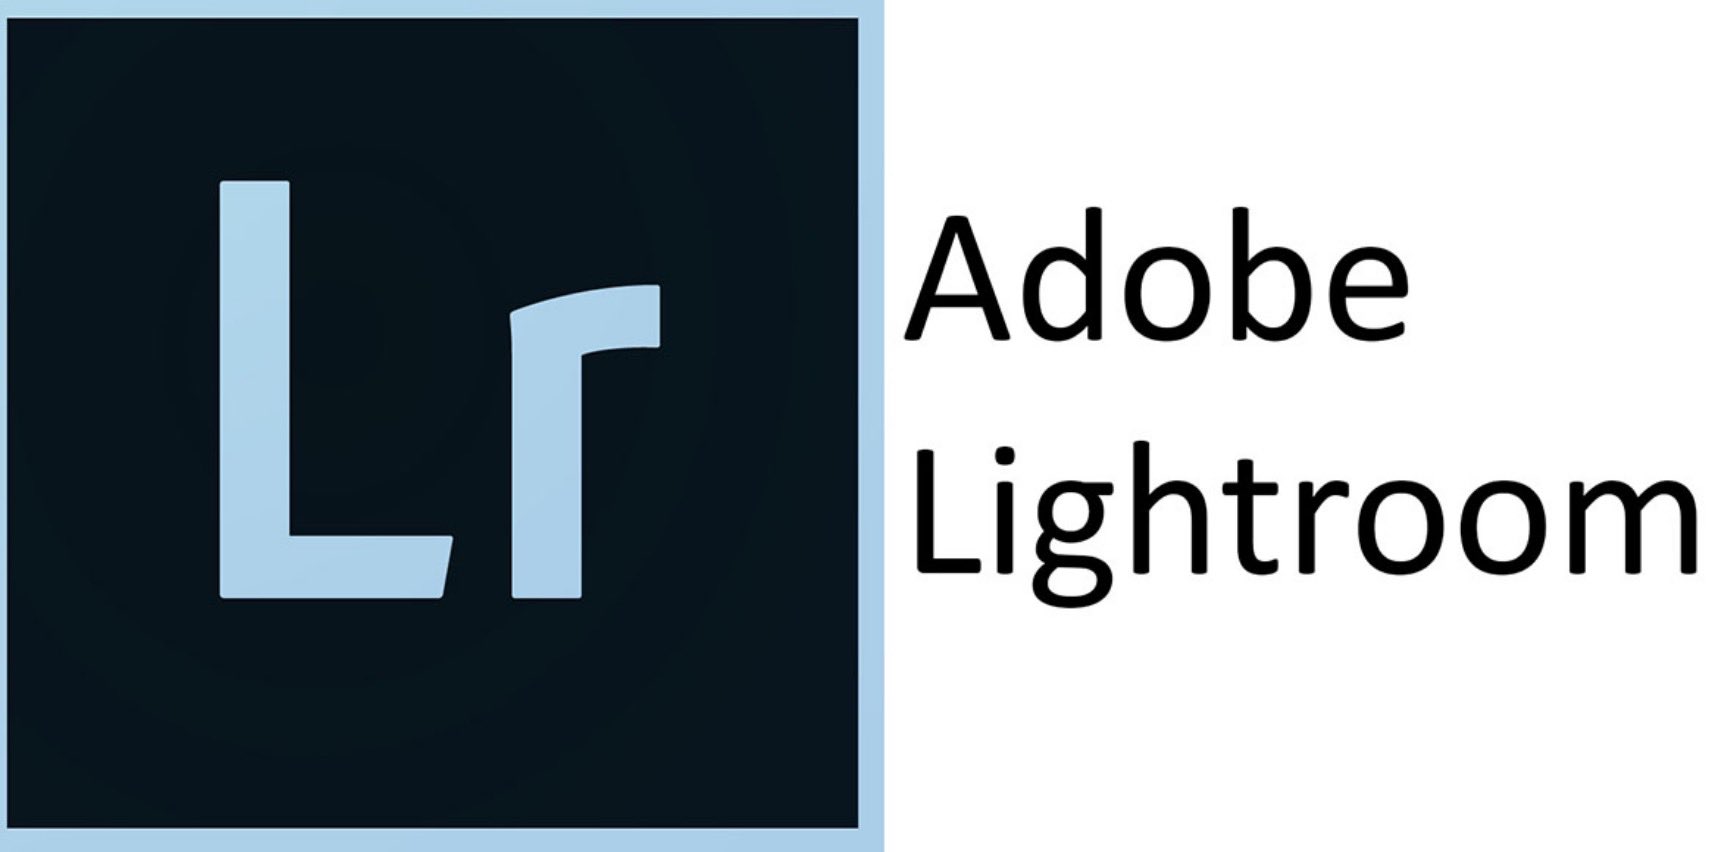 Adobe Lightroom: Transforming Photography Editing